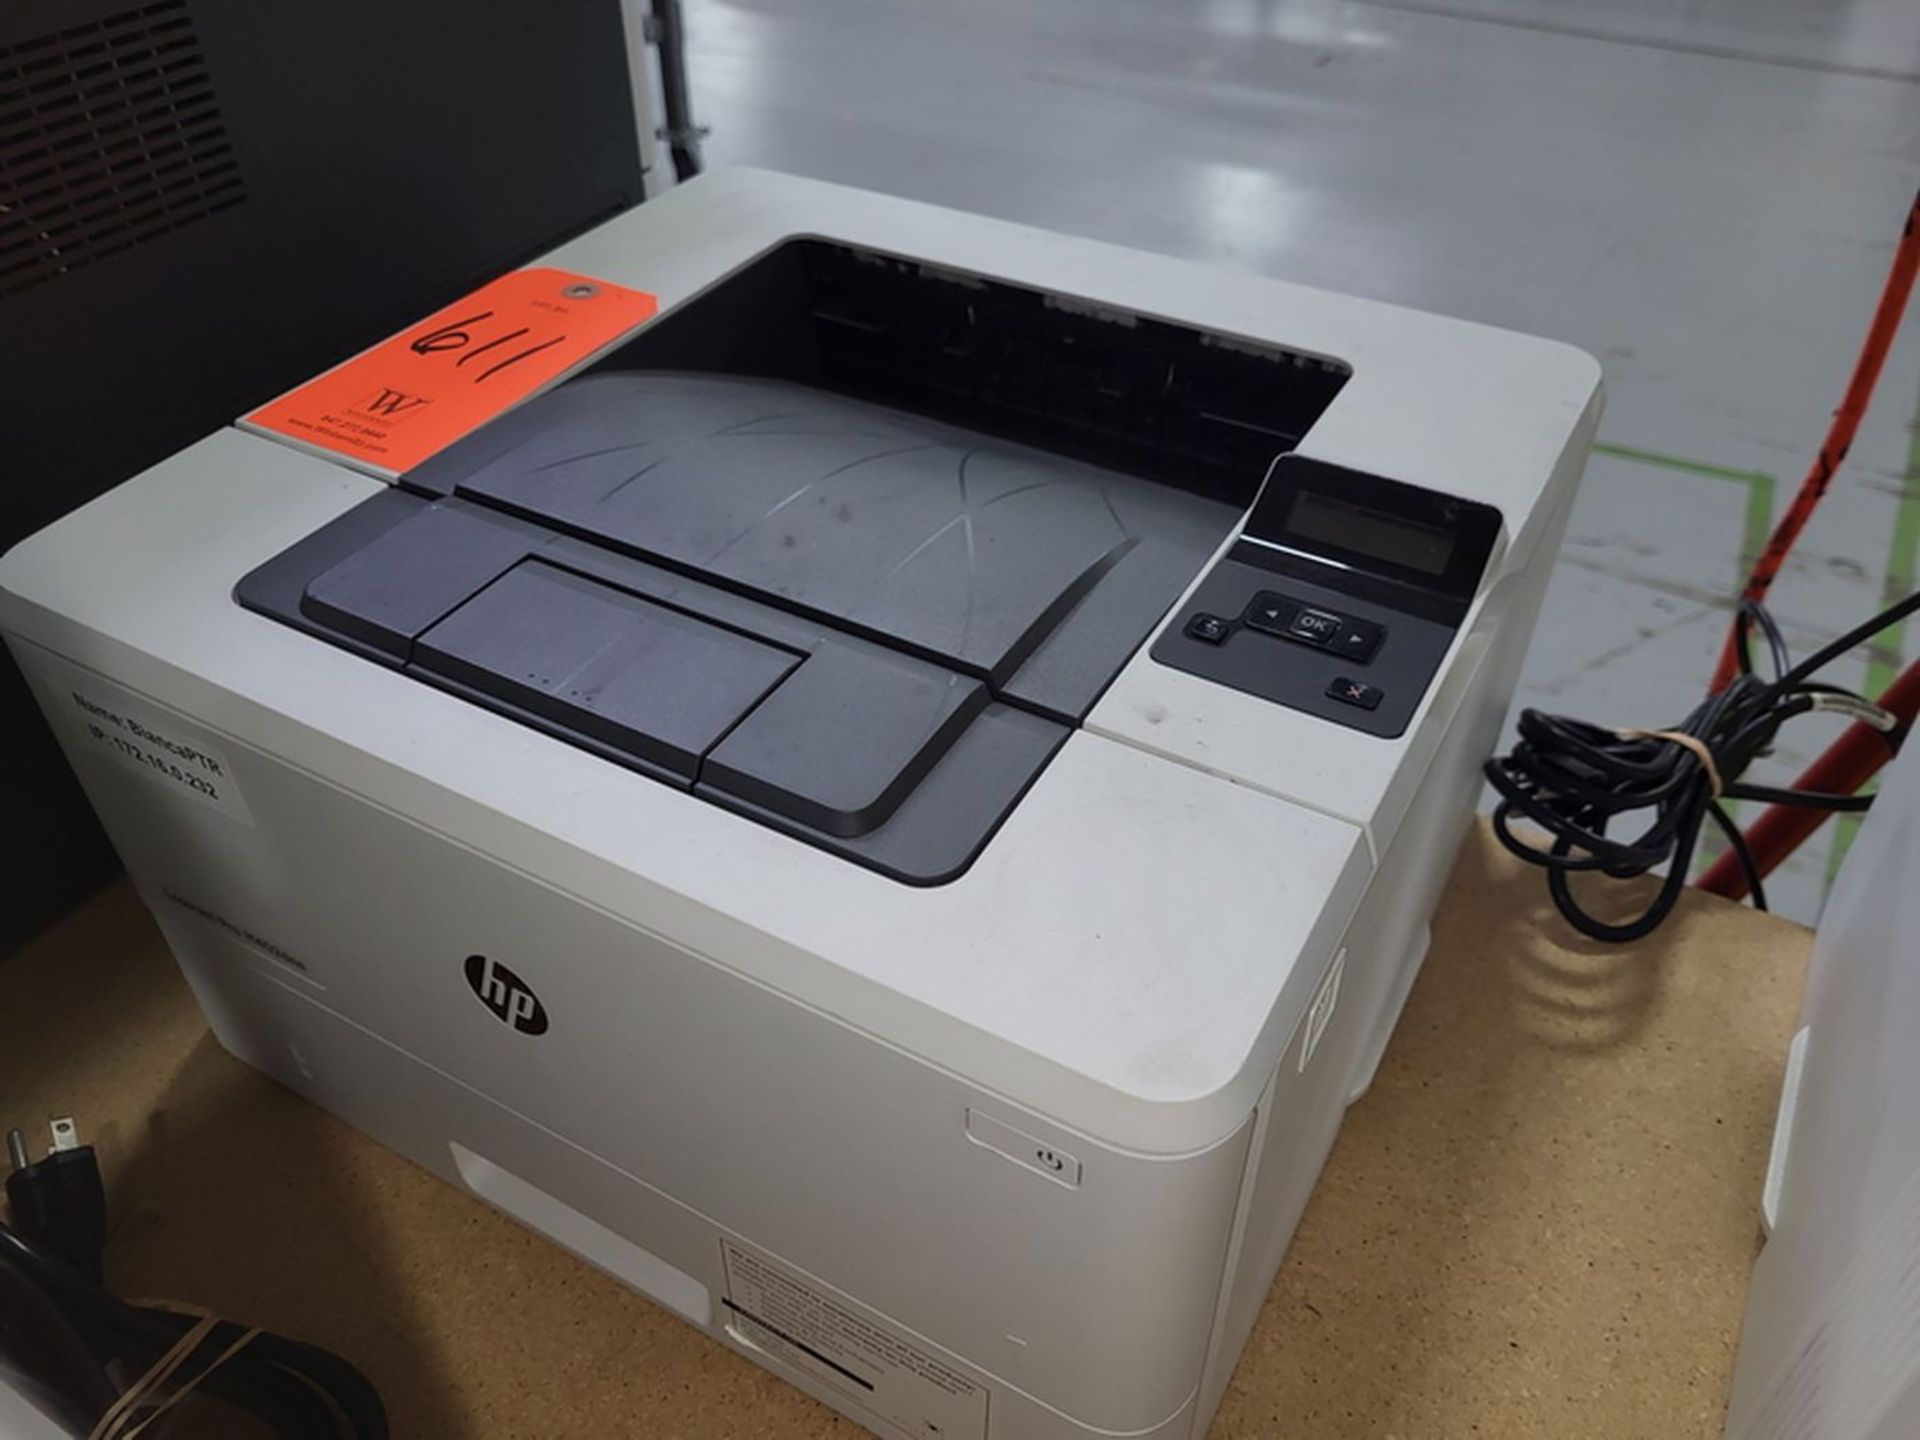 HP LaserJet Pro M402dne Laser Printer;